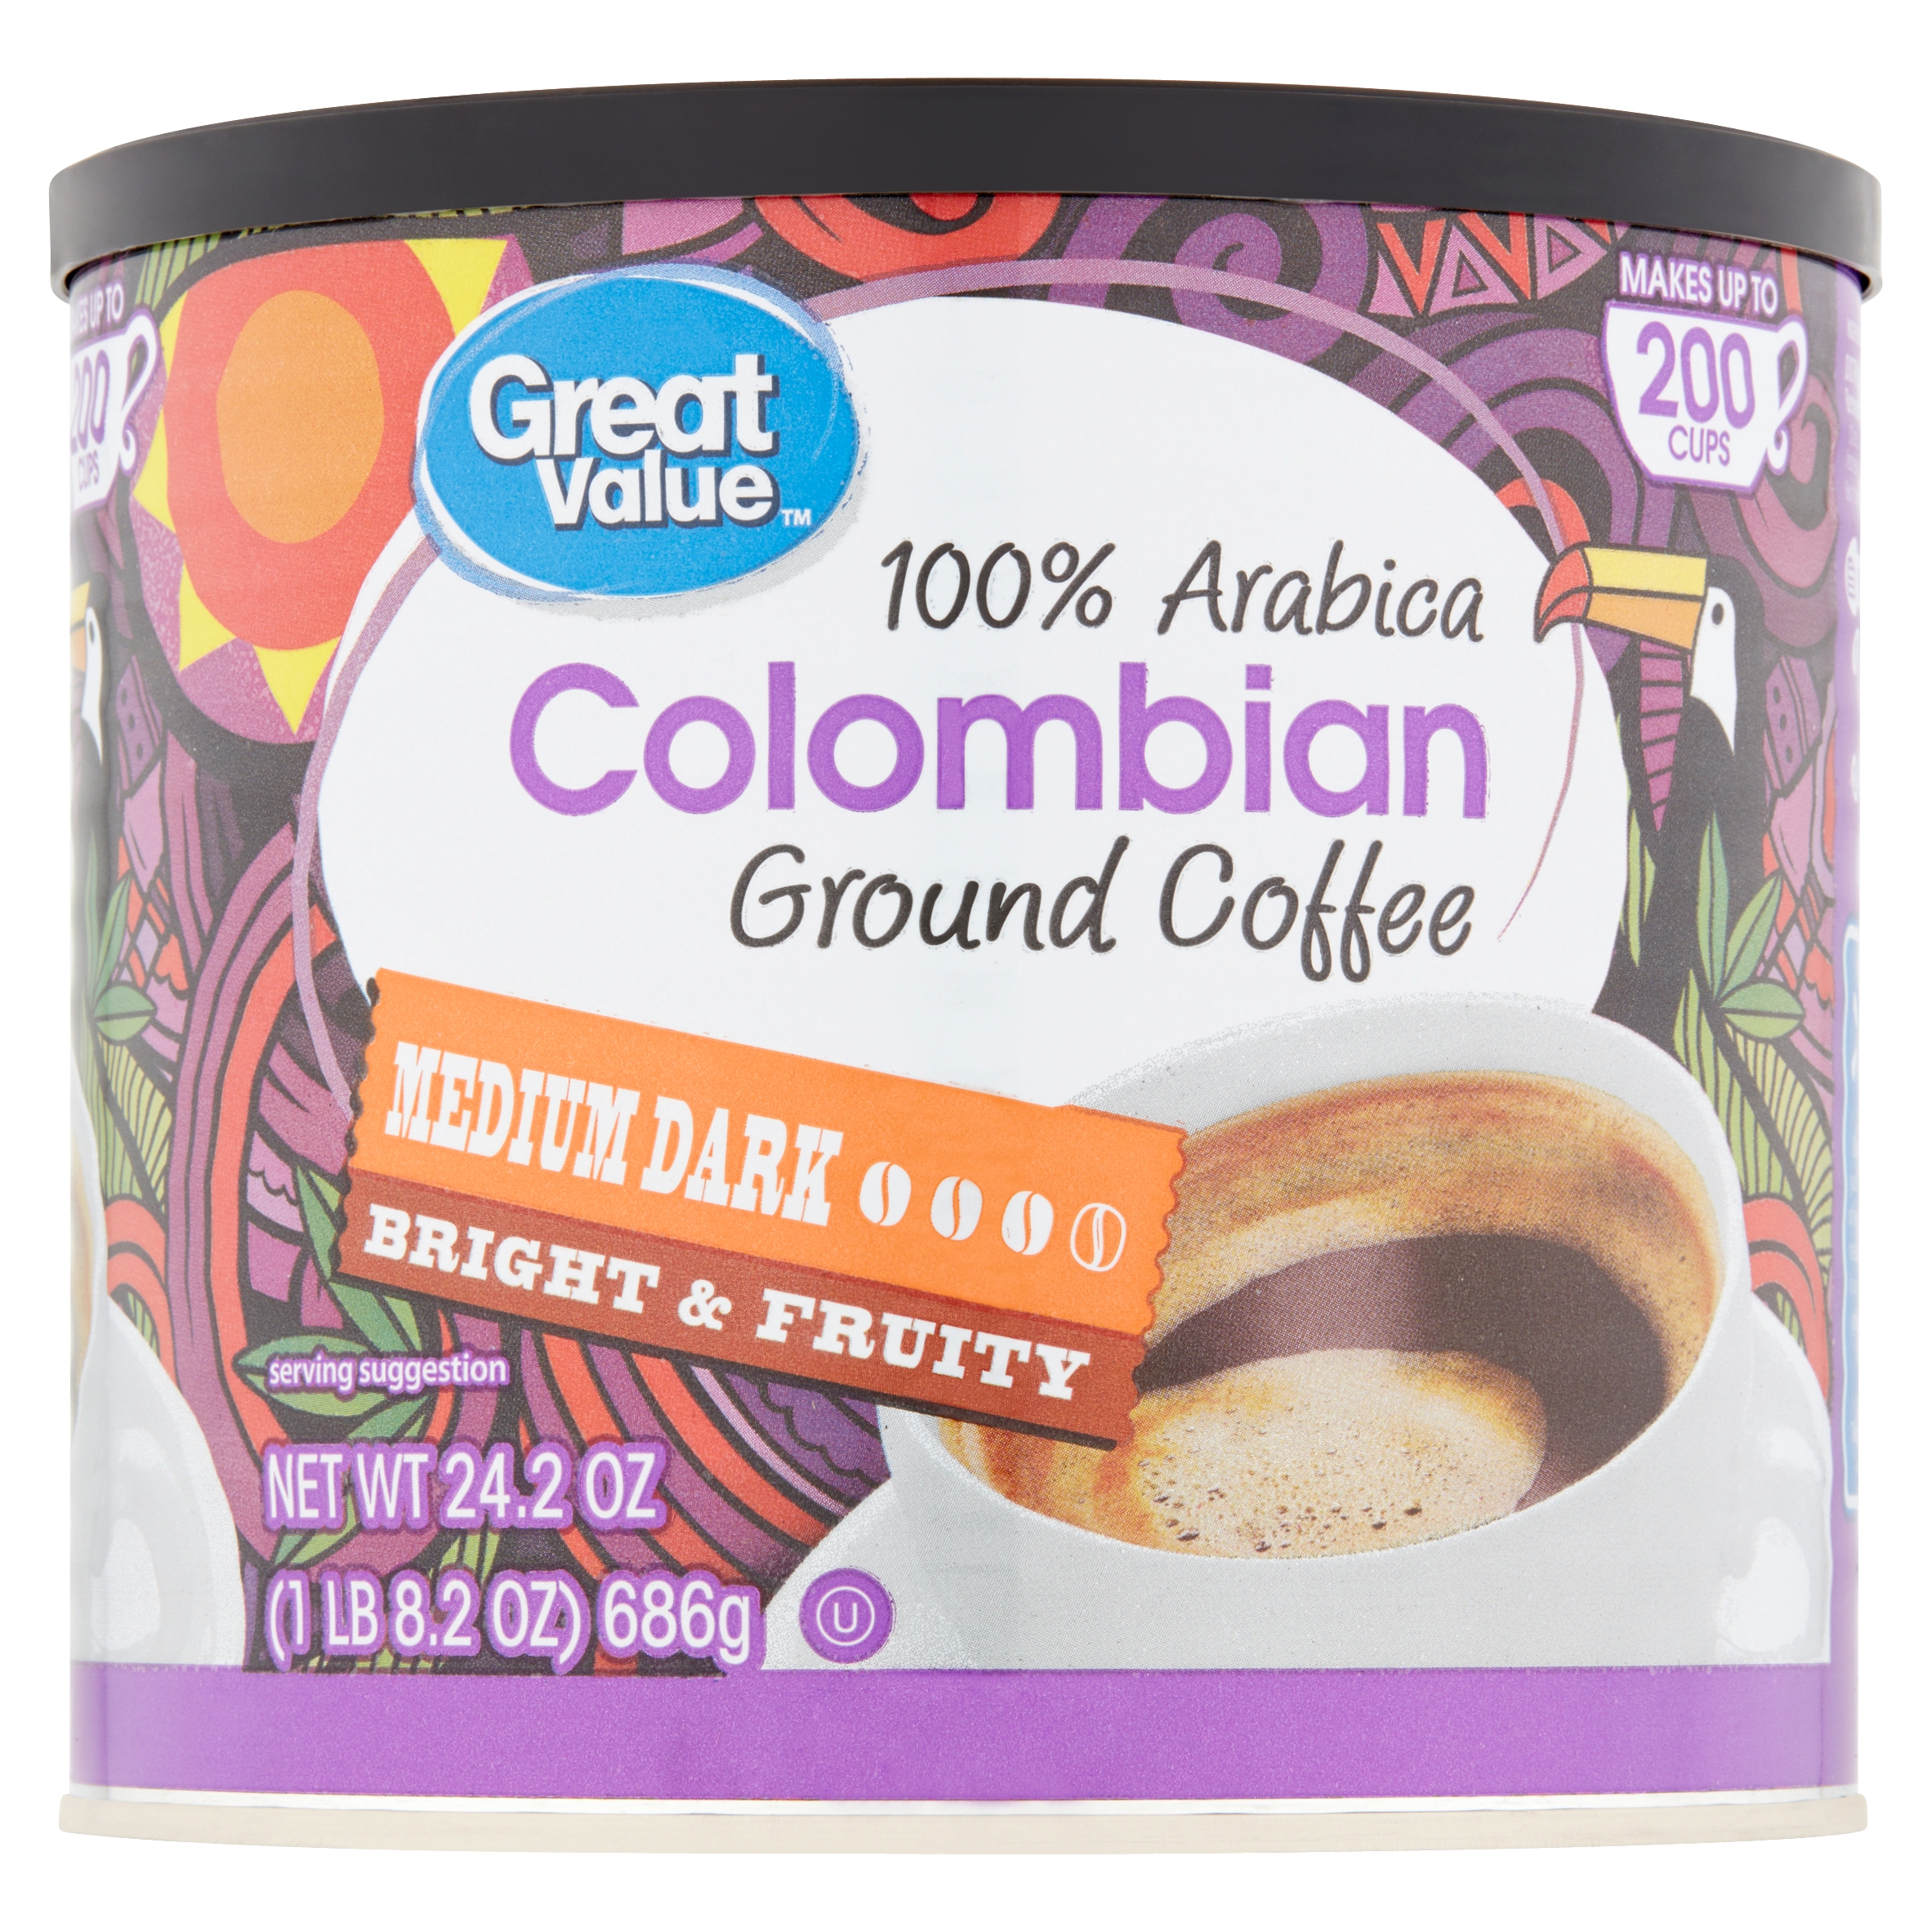 Great Value 100% Arabica Colombian Medium Dark Ground Coffee, 24.2 oz